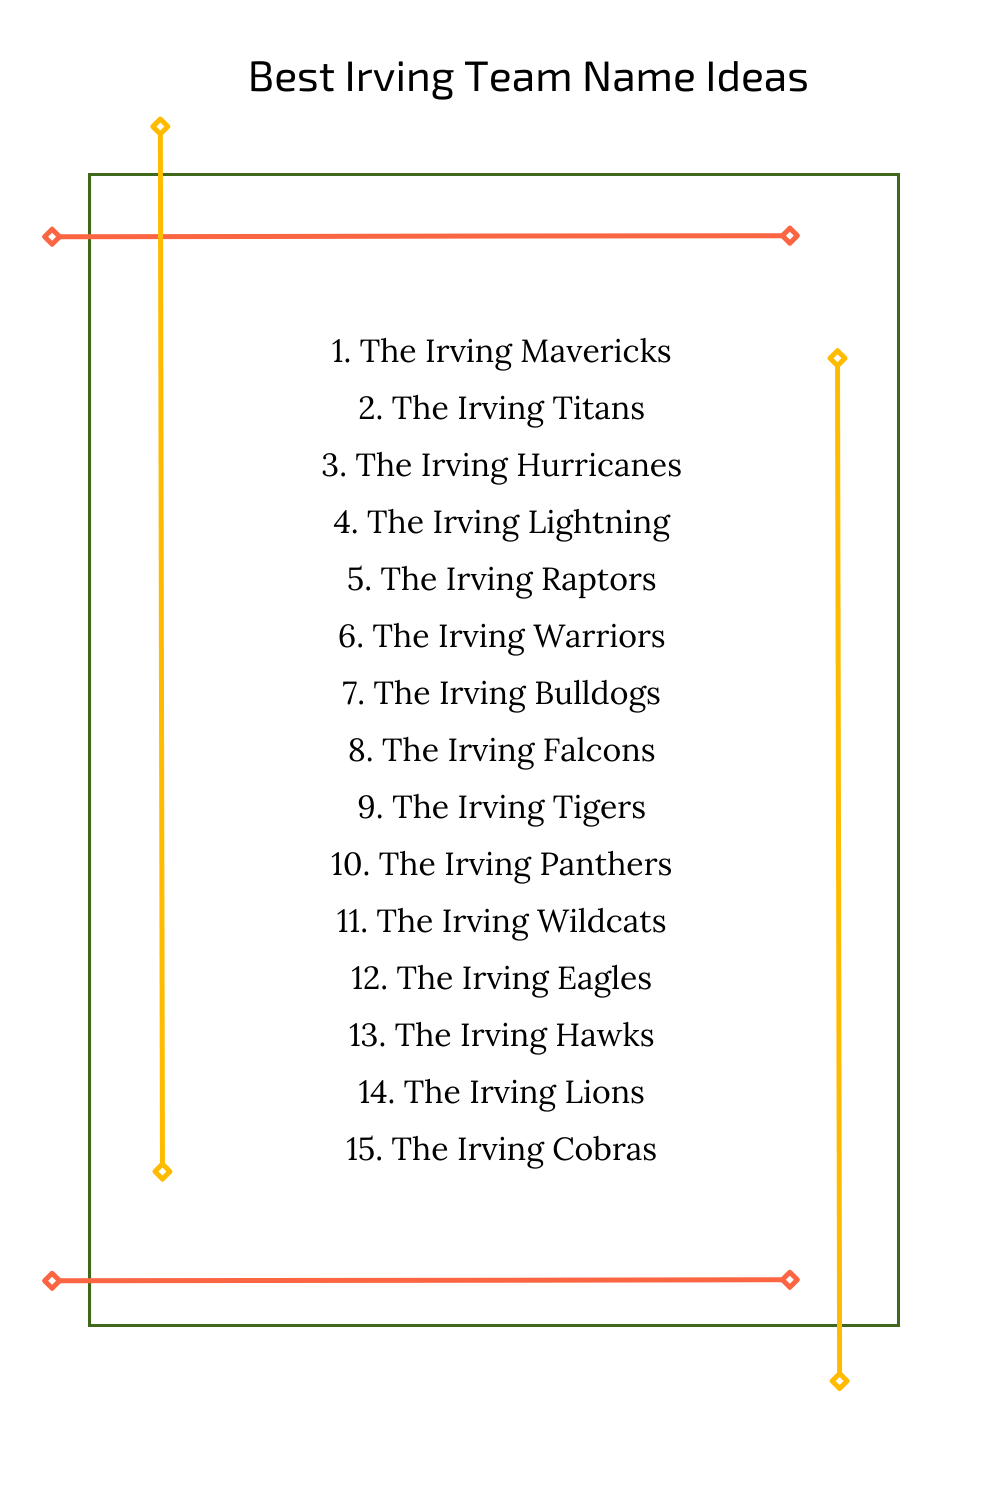 Best Irving Team Name Ideas